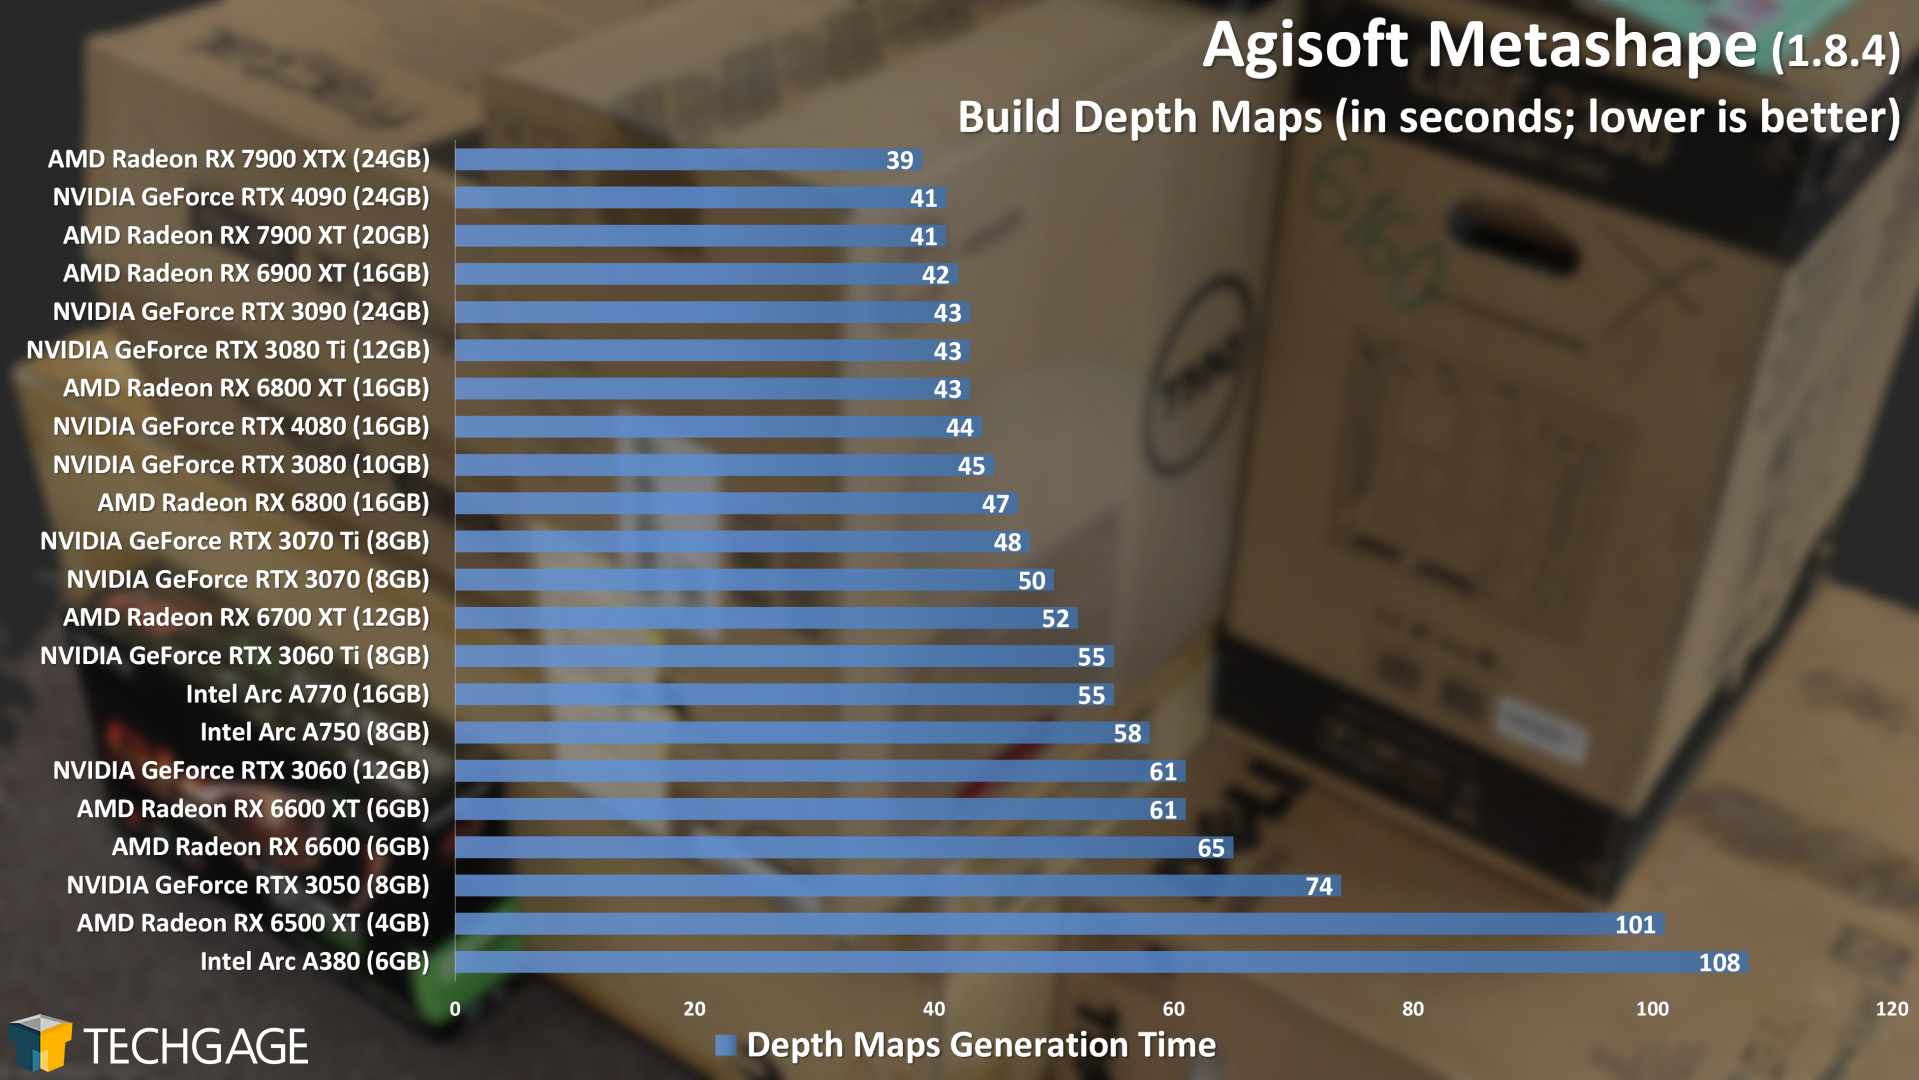 Agisoft Metashape Performance (AMD Radeon RX 7900 XT and XTX)